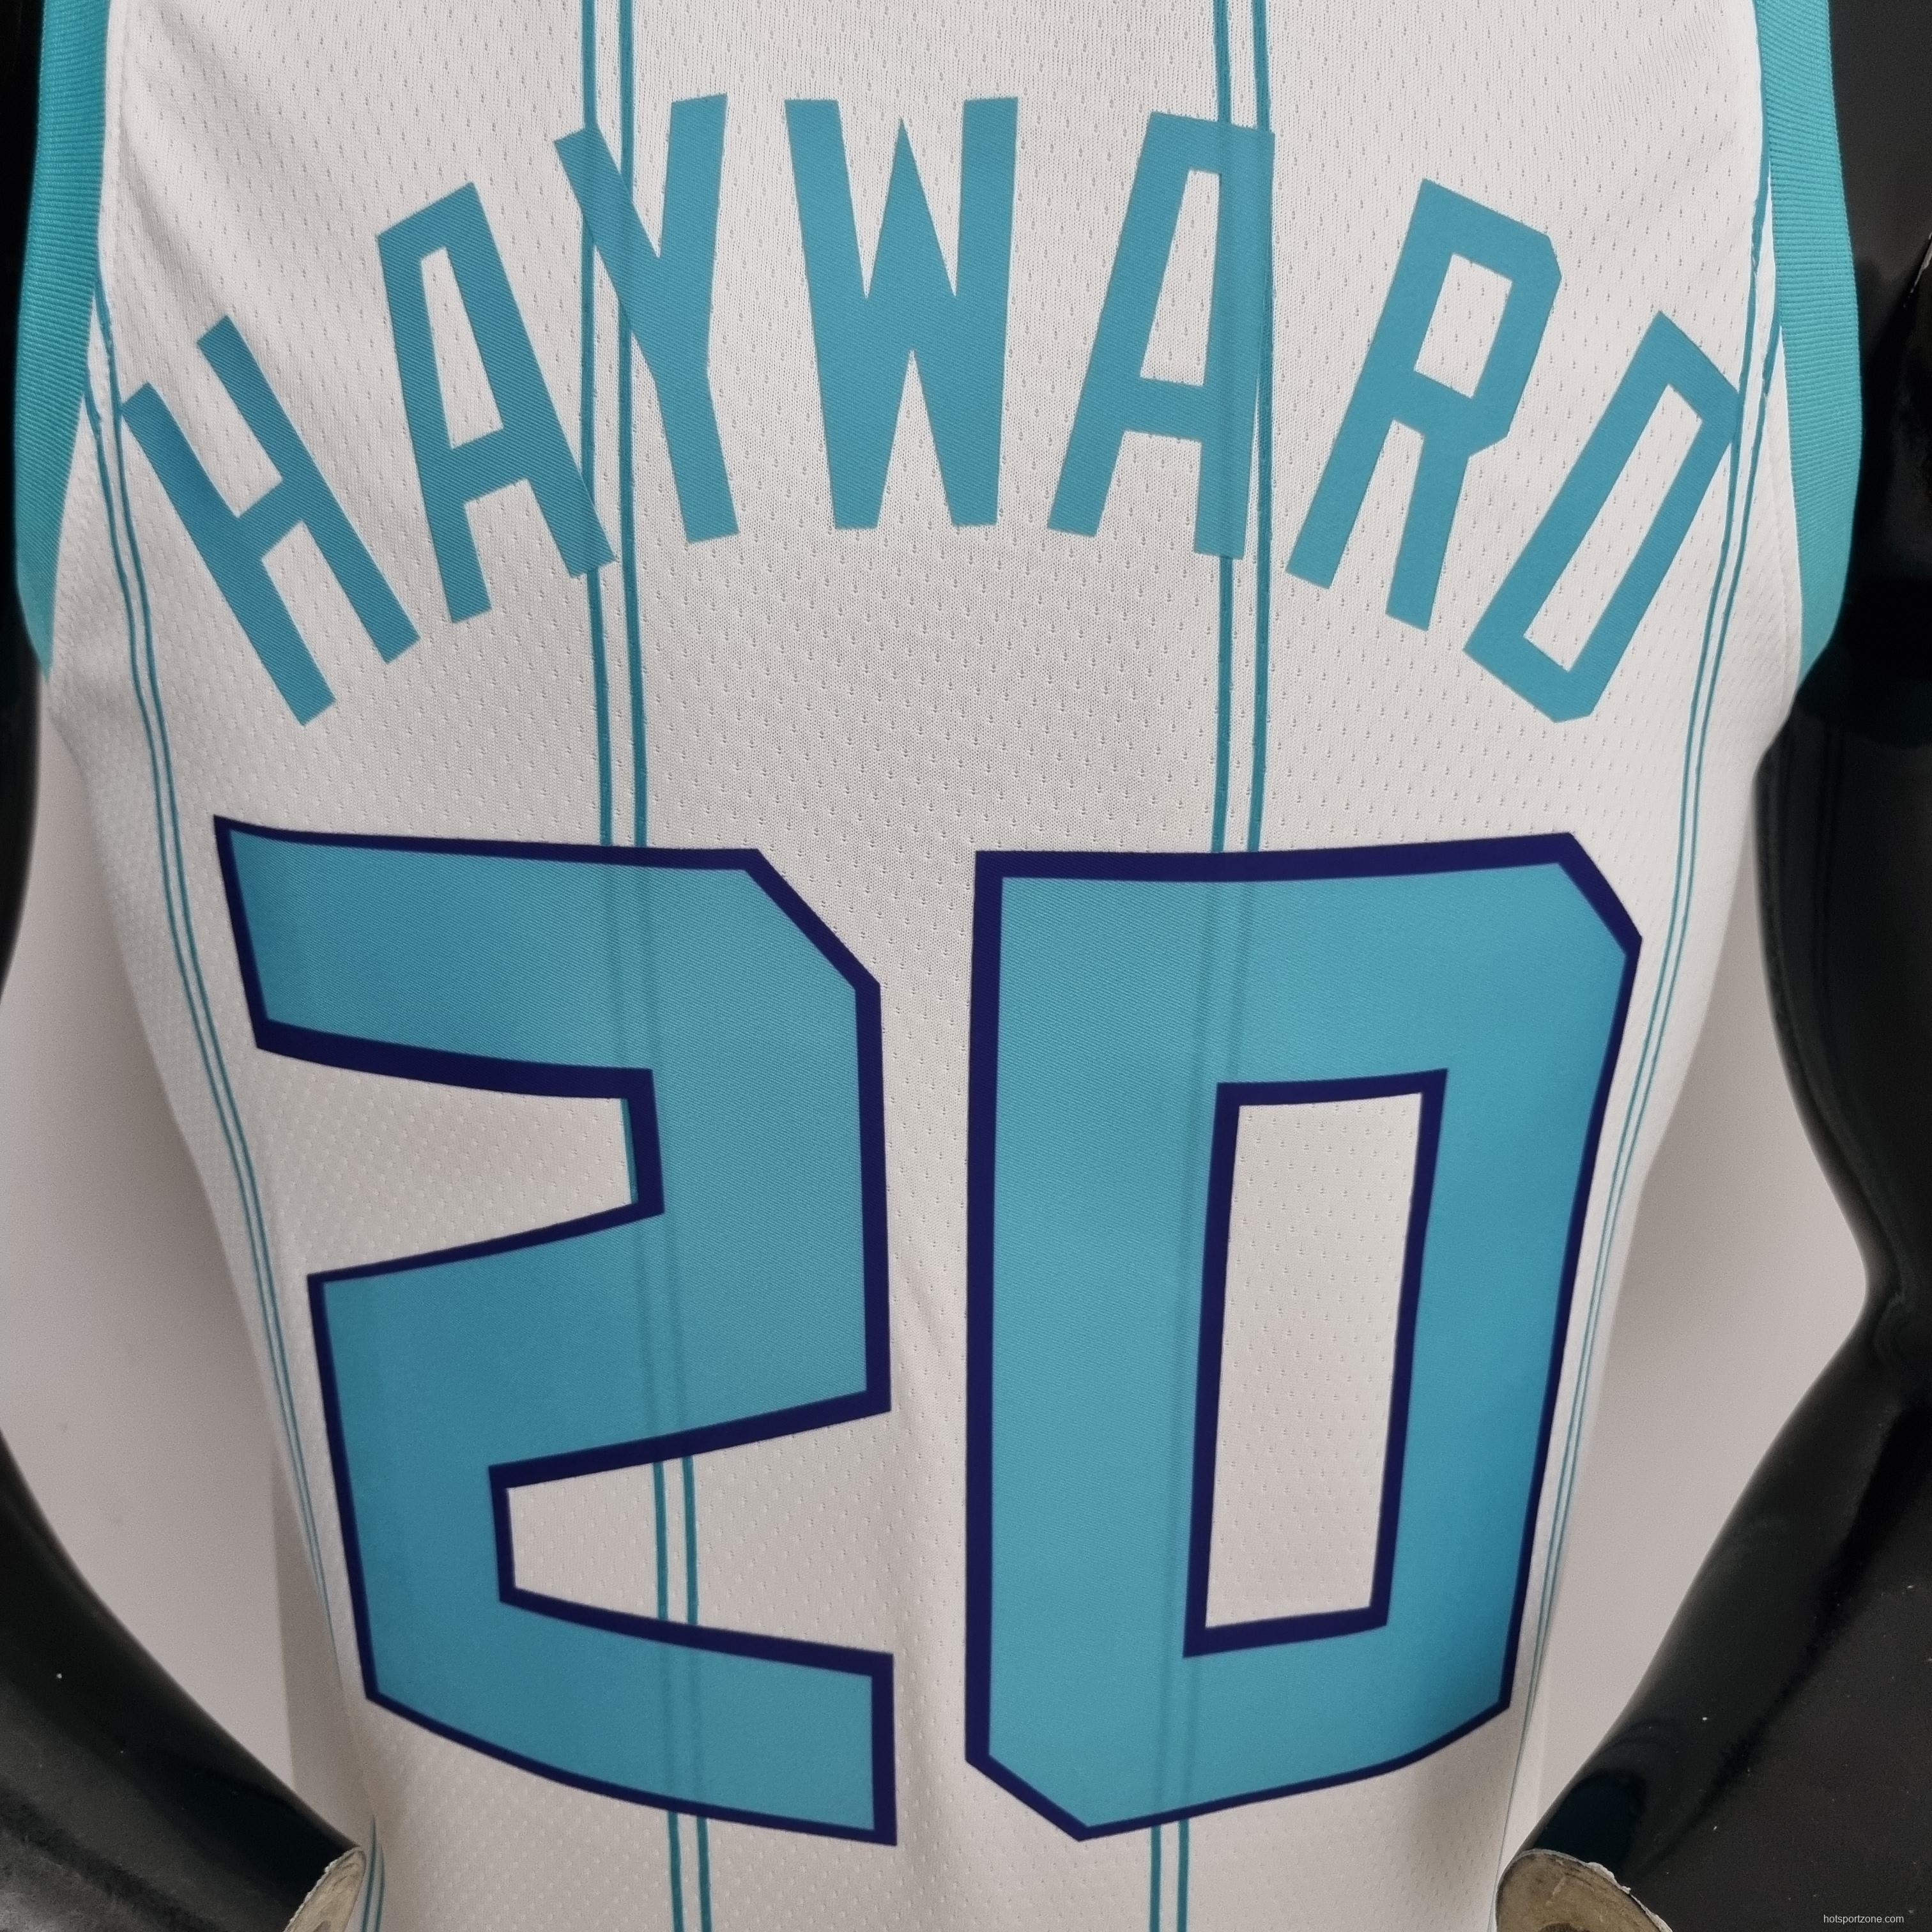 75th Anniversary Hayward #20 Charlotte Hornets White NBA Jersey